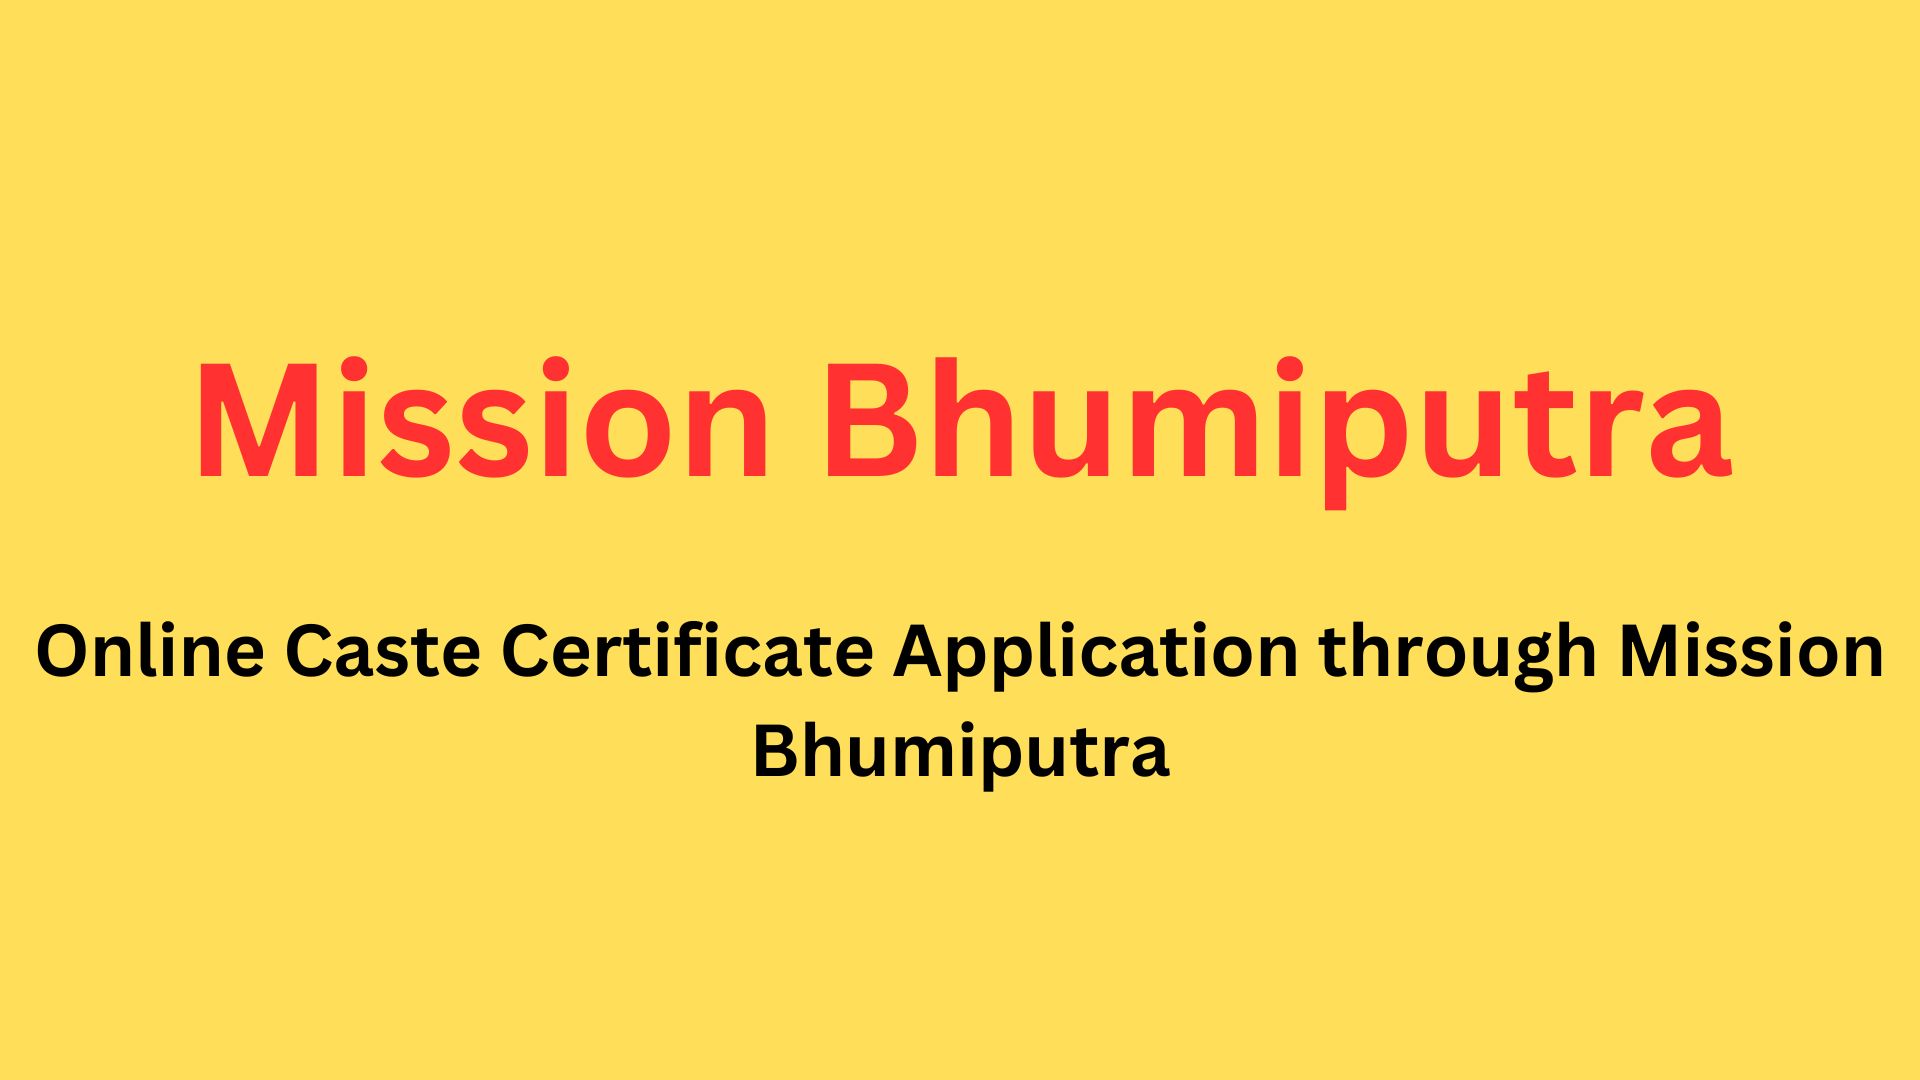 Mission Bhumiputra